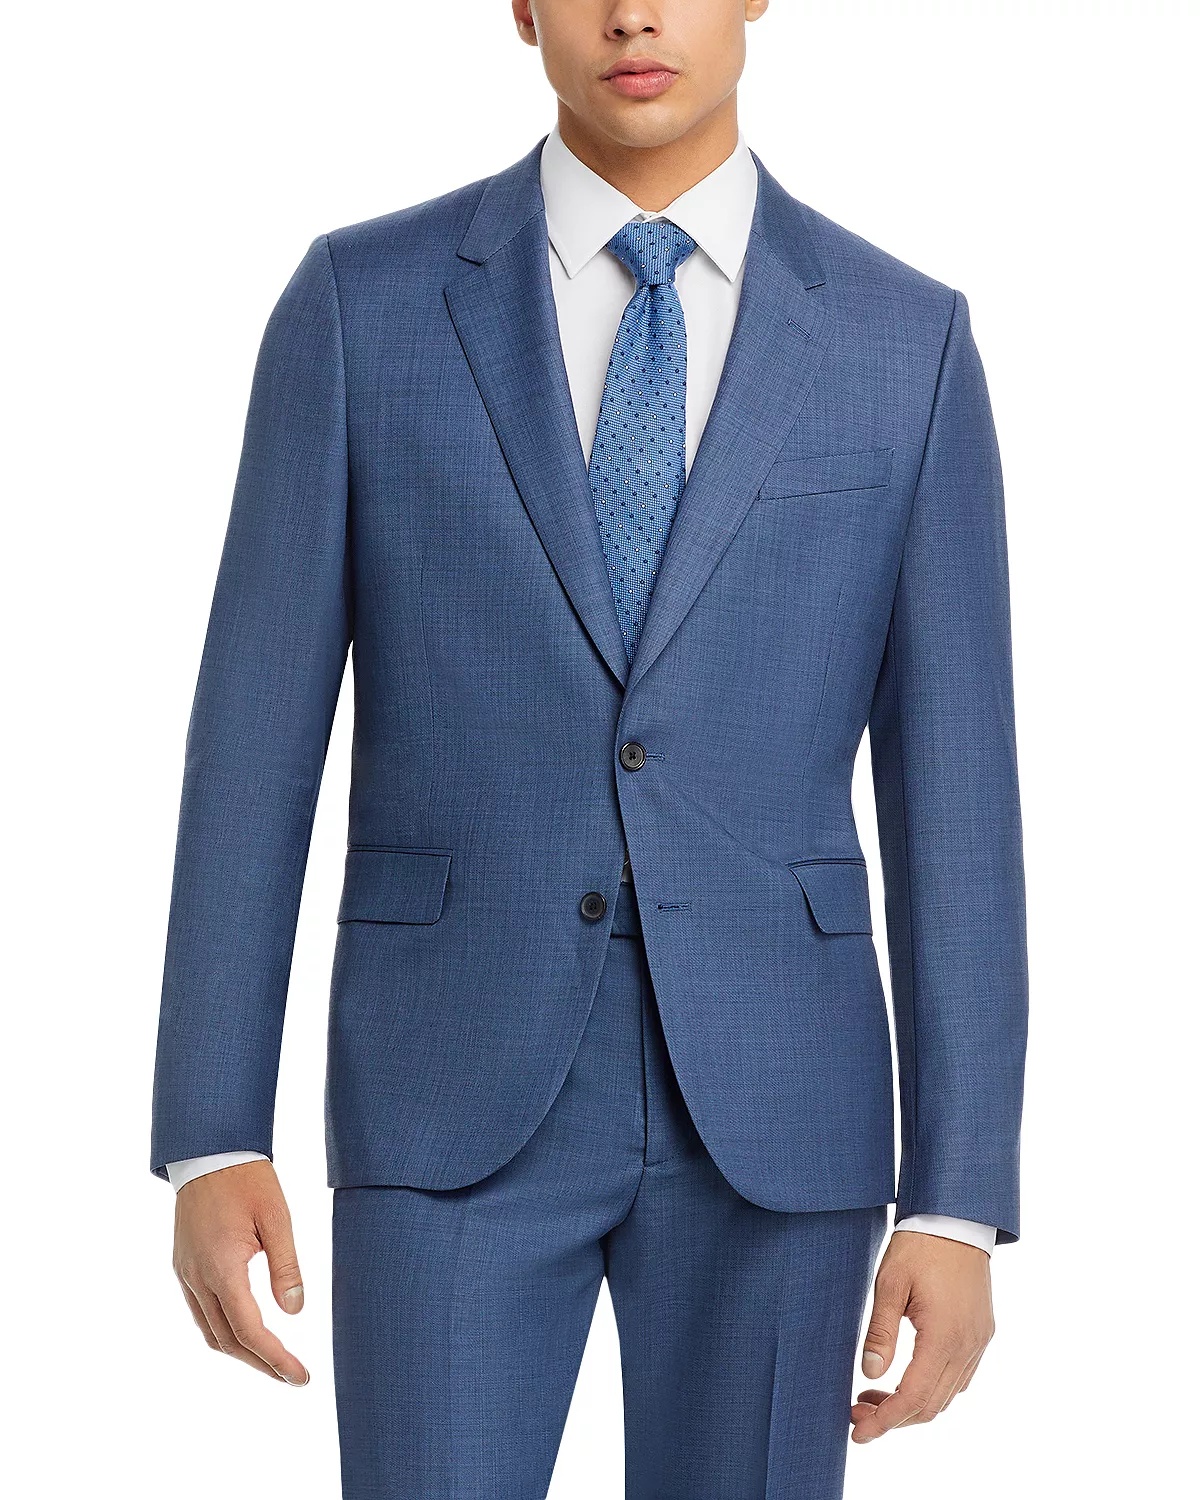 Soho Sharkskin Extra Slim Fit Suit - 4